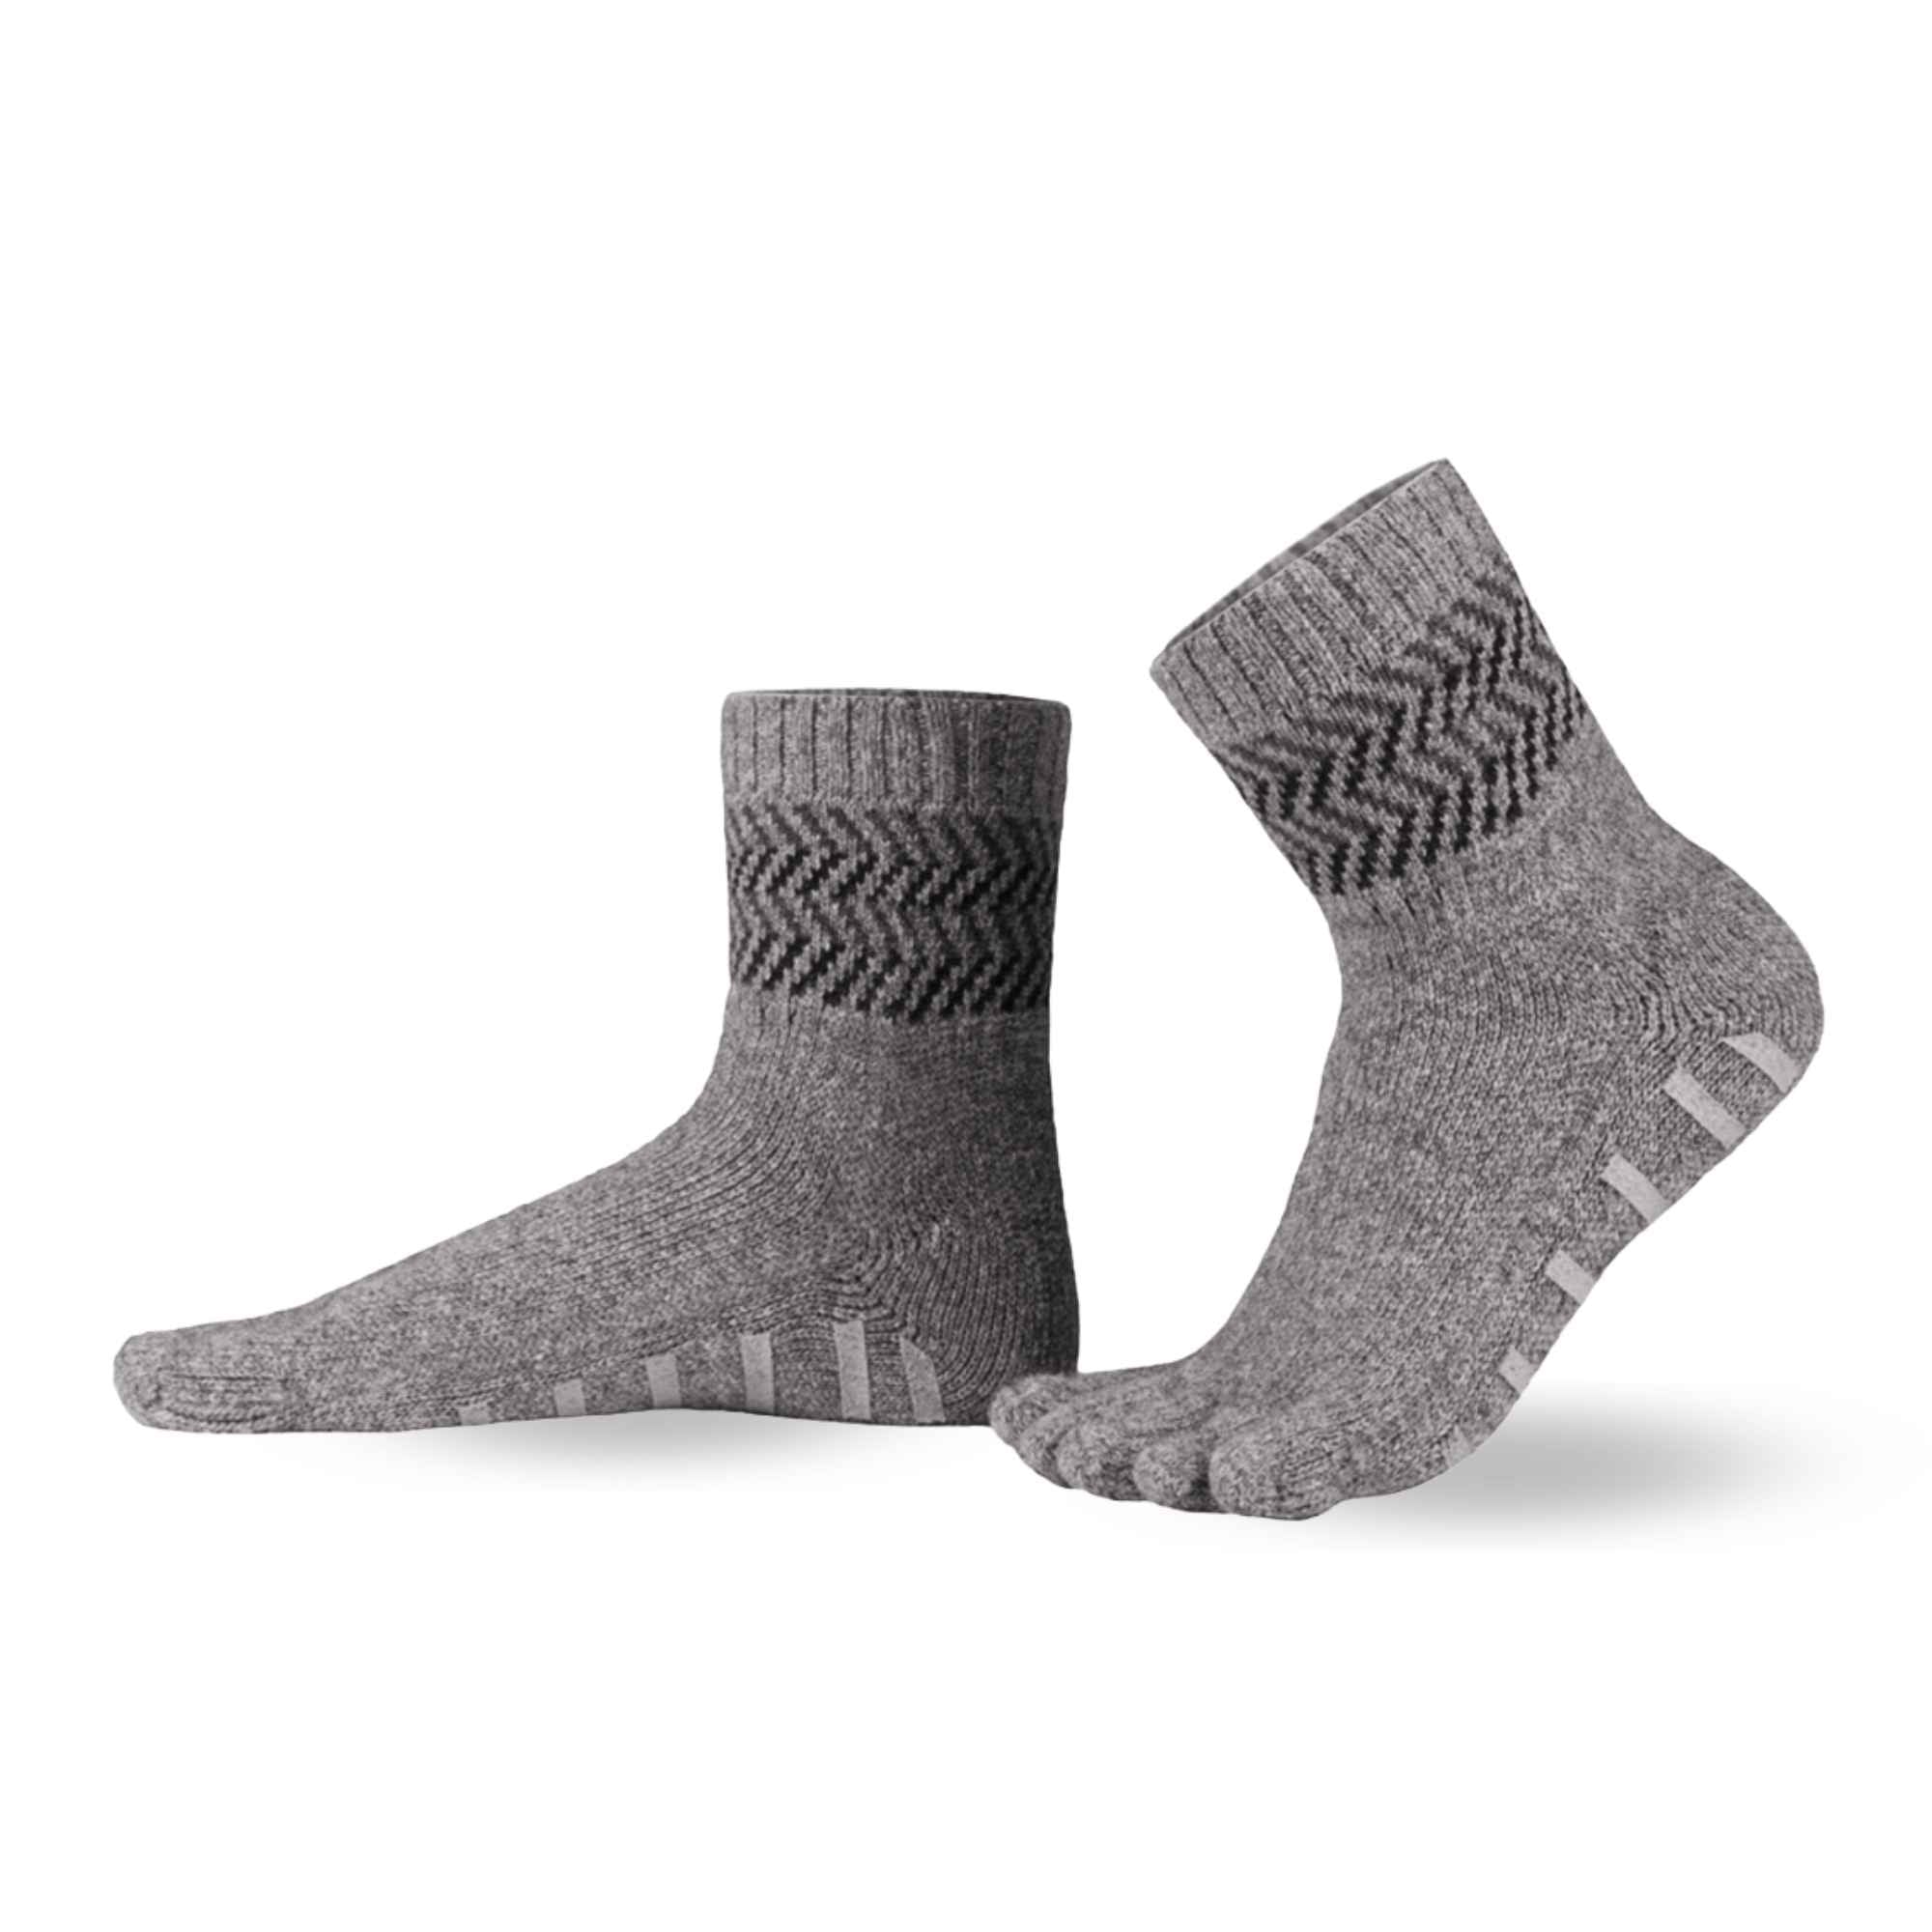 Knitido Home cashmere and merino socks - Knitido®